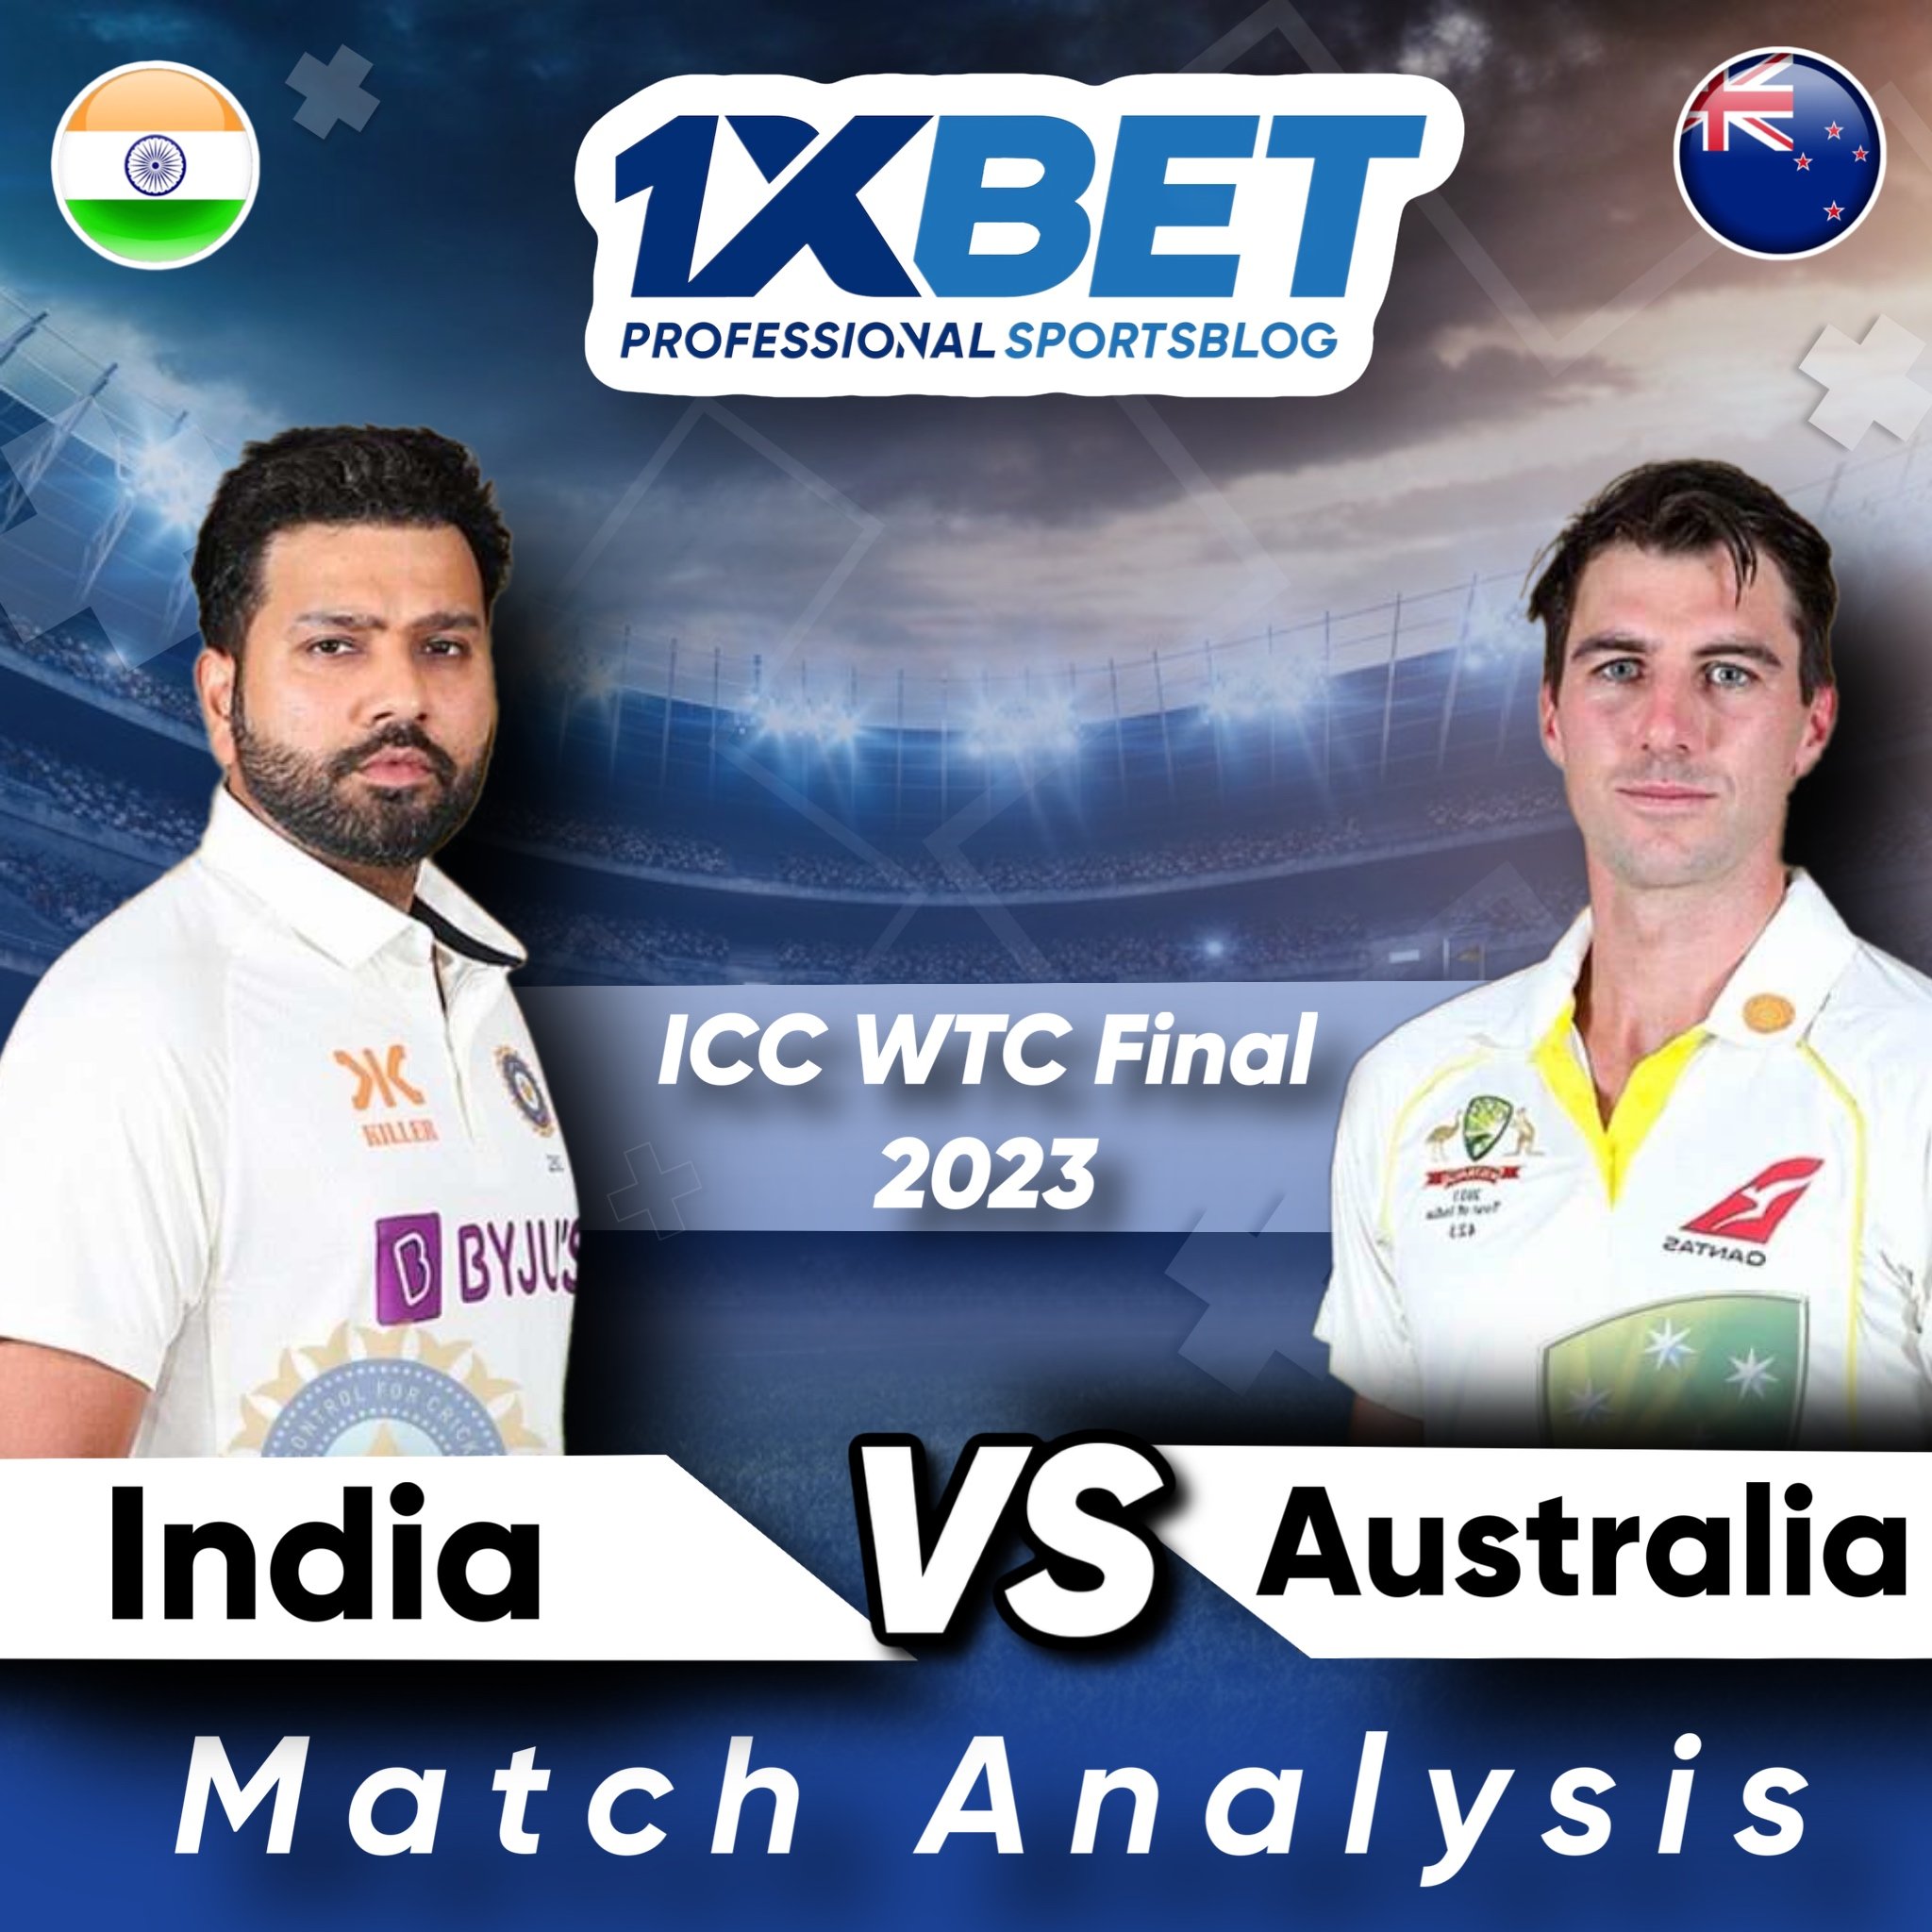 Australia vs India, Day 3, ICC WTC Final 2023 Match Analysis